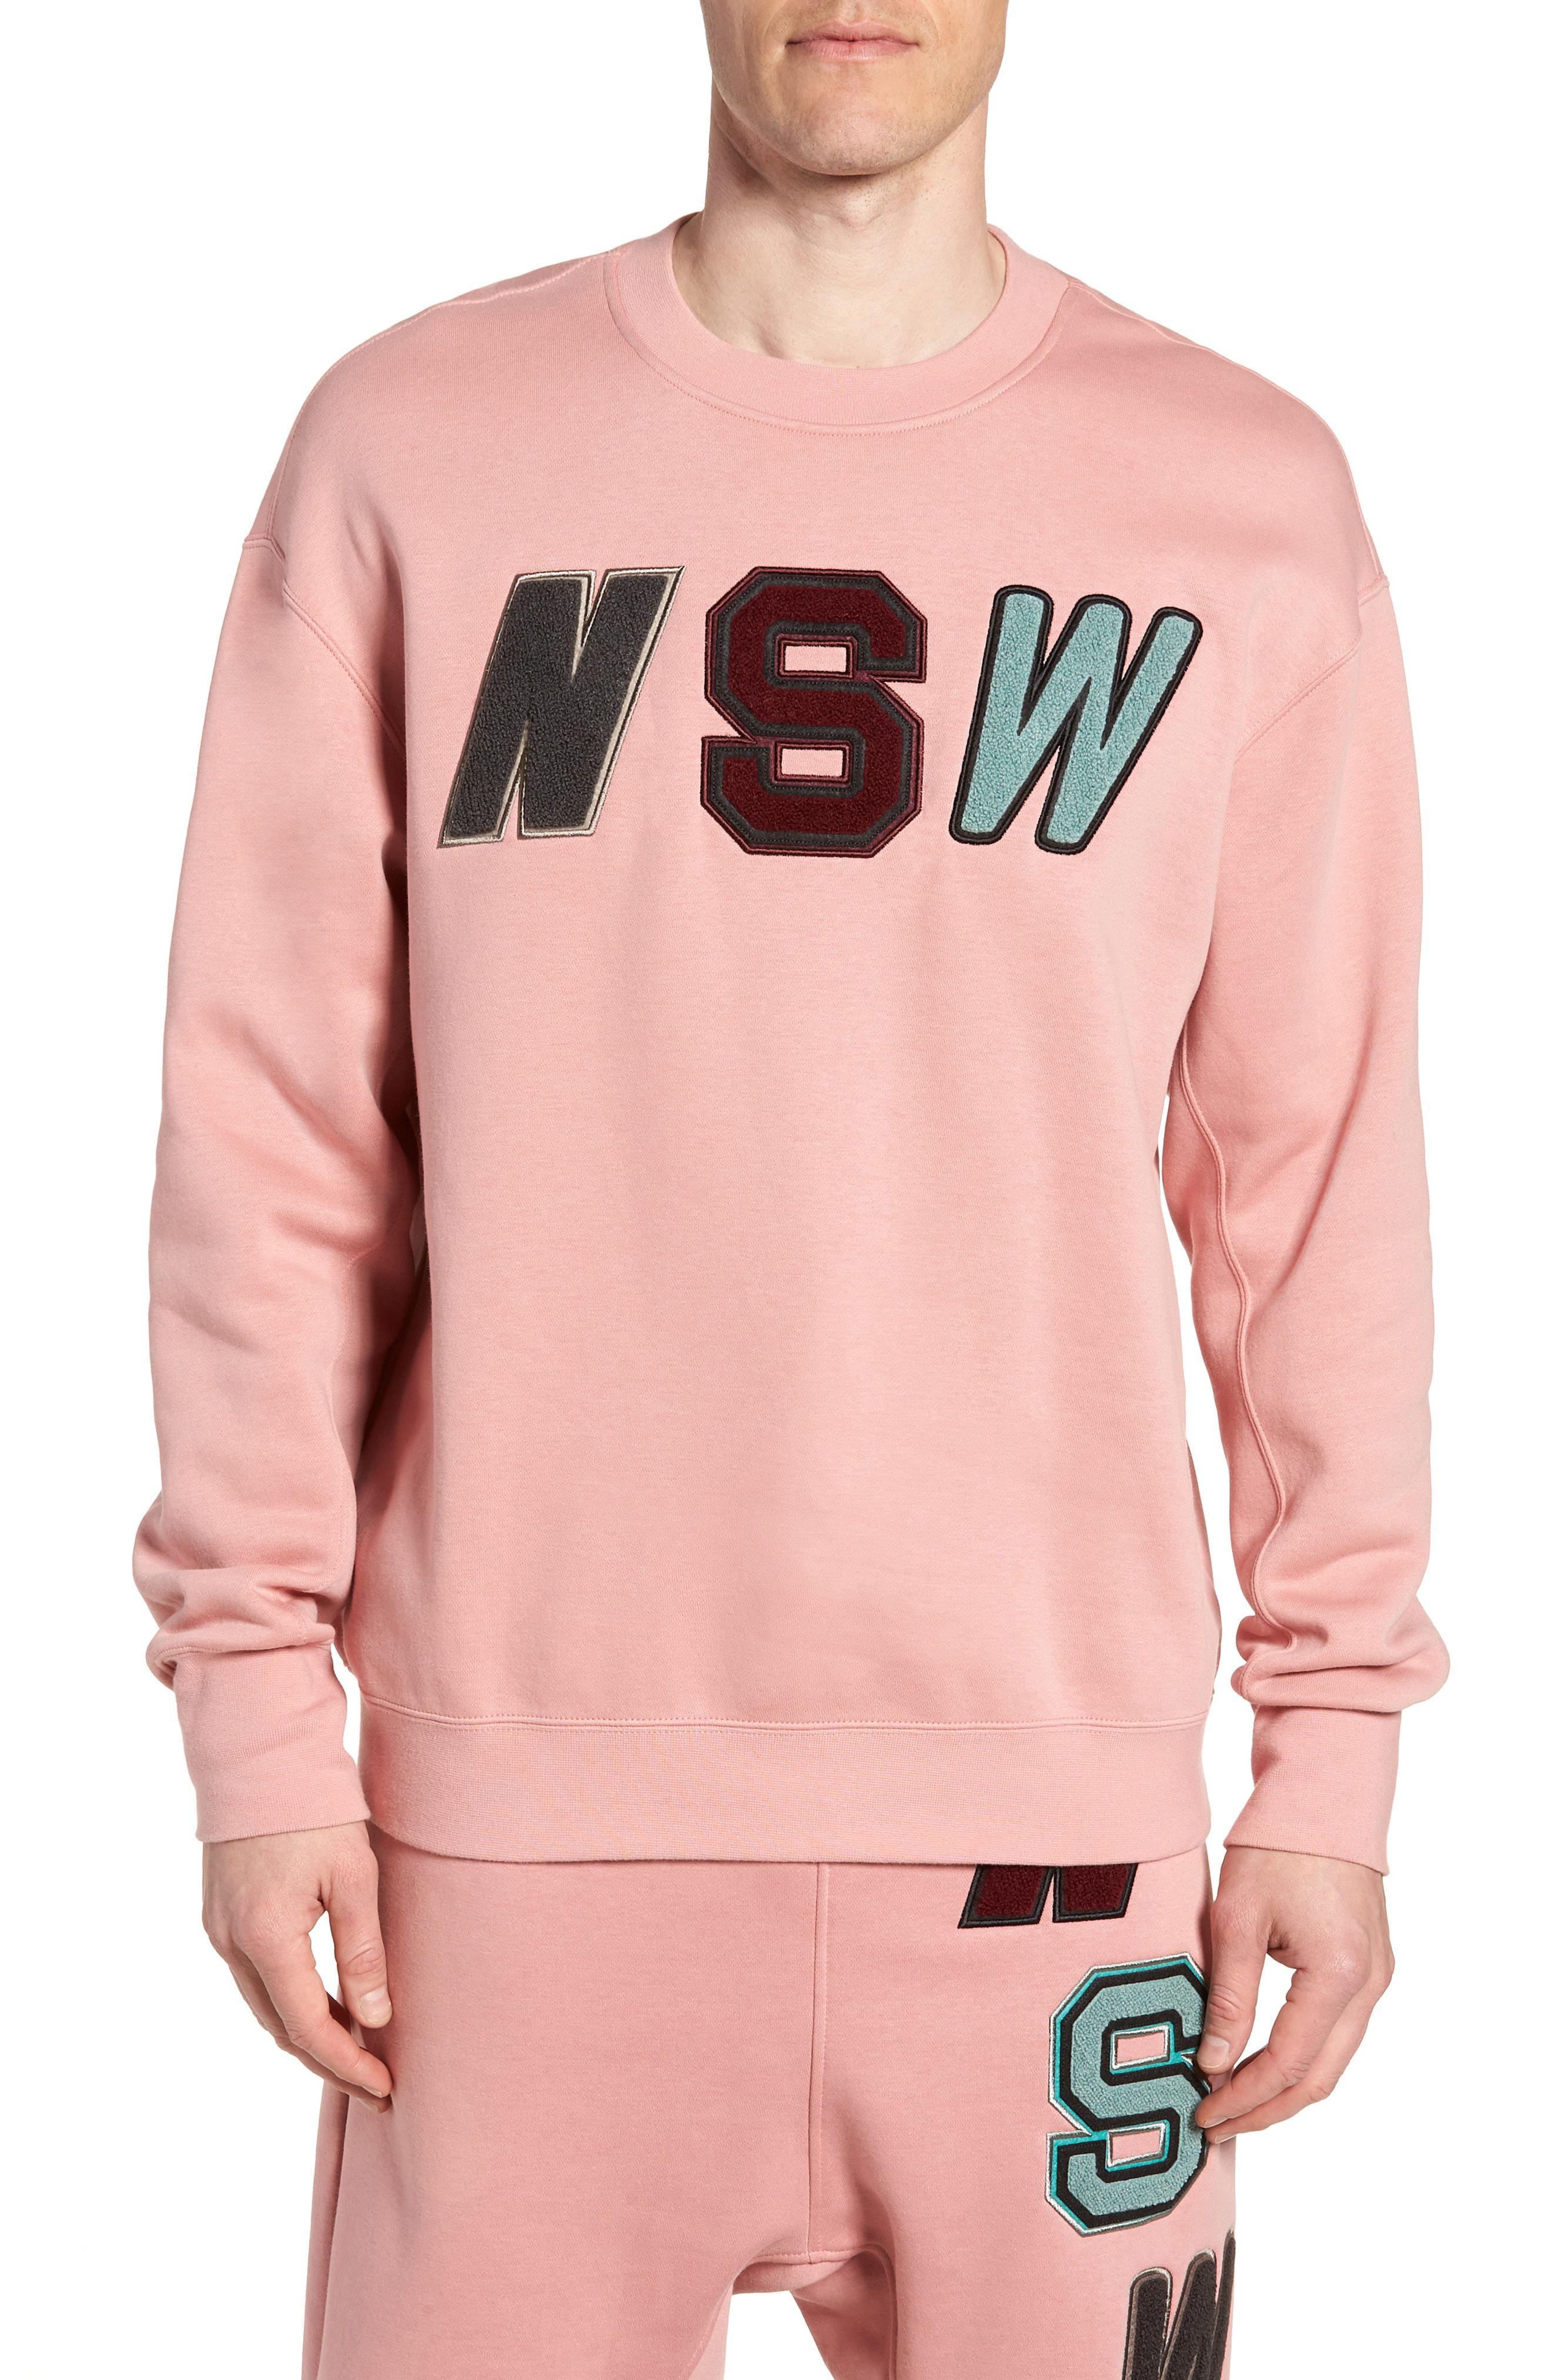 Nike Fleece Nsw Crewneck Sweatshirt for Men - Lyst